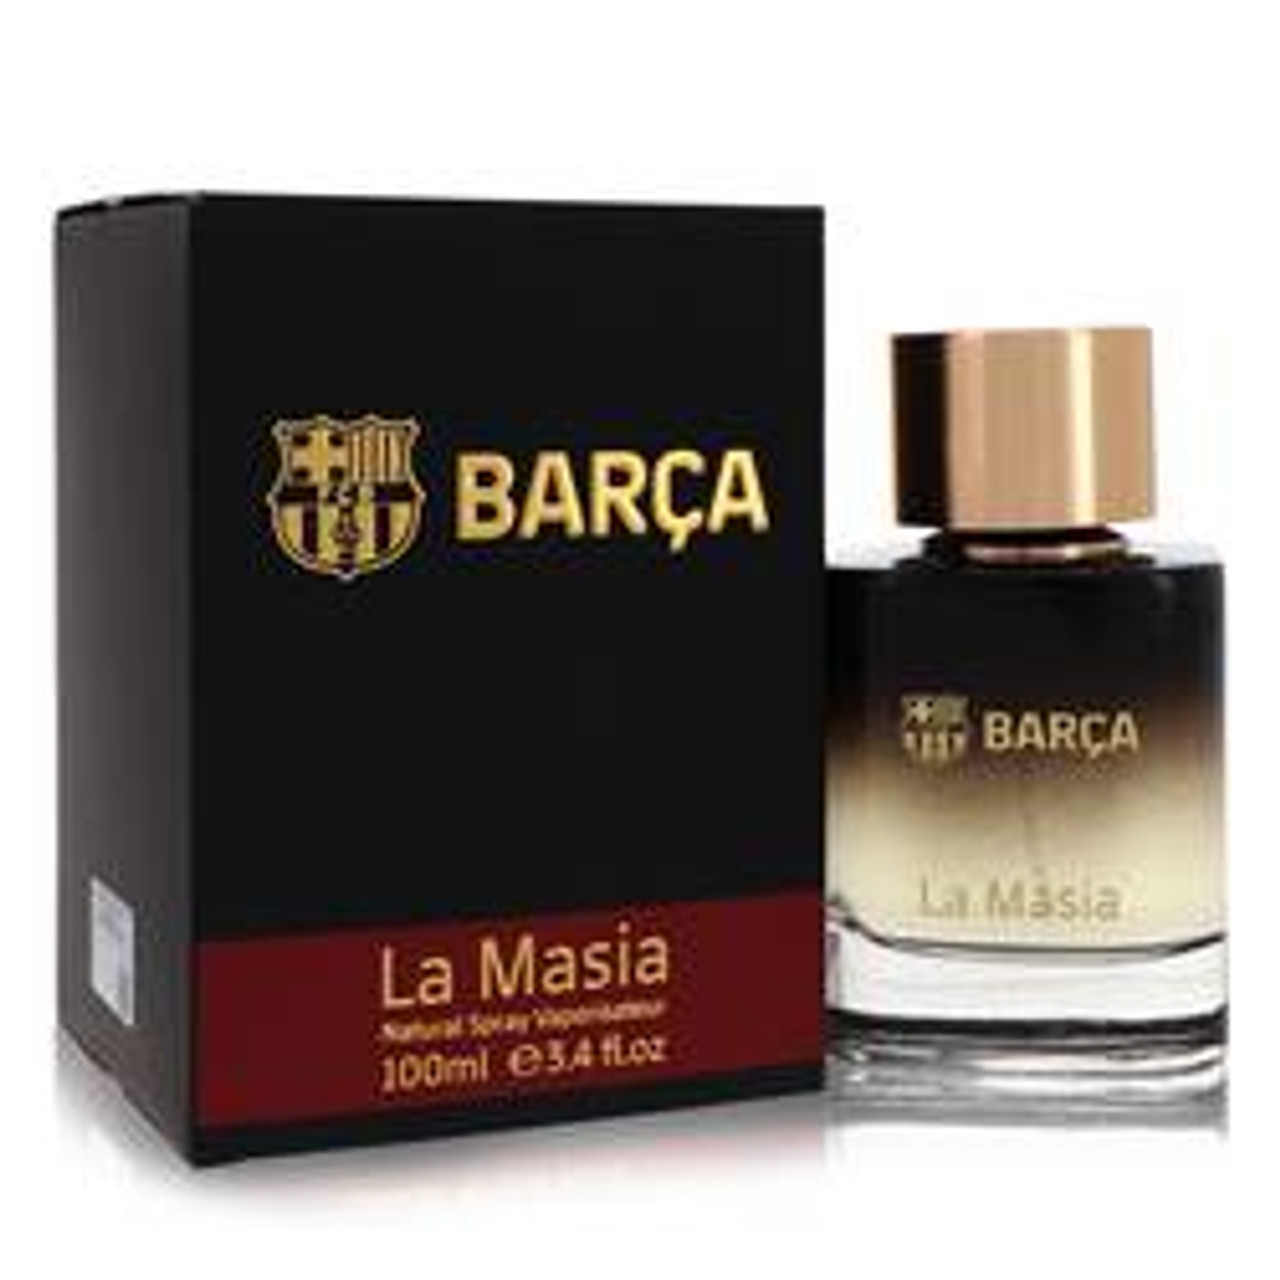 Barca La Masia Cologne By Barca Eau De Parfum Spray 3.4 oz for Men - [From 63.00 - Choose pk Qty ] - *Ships from Miami